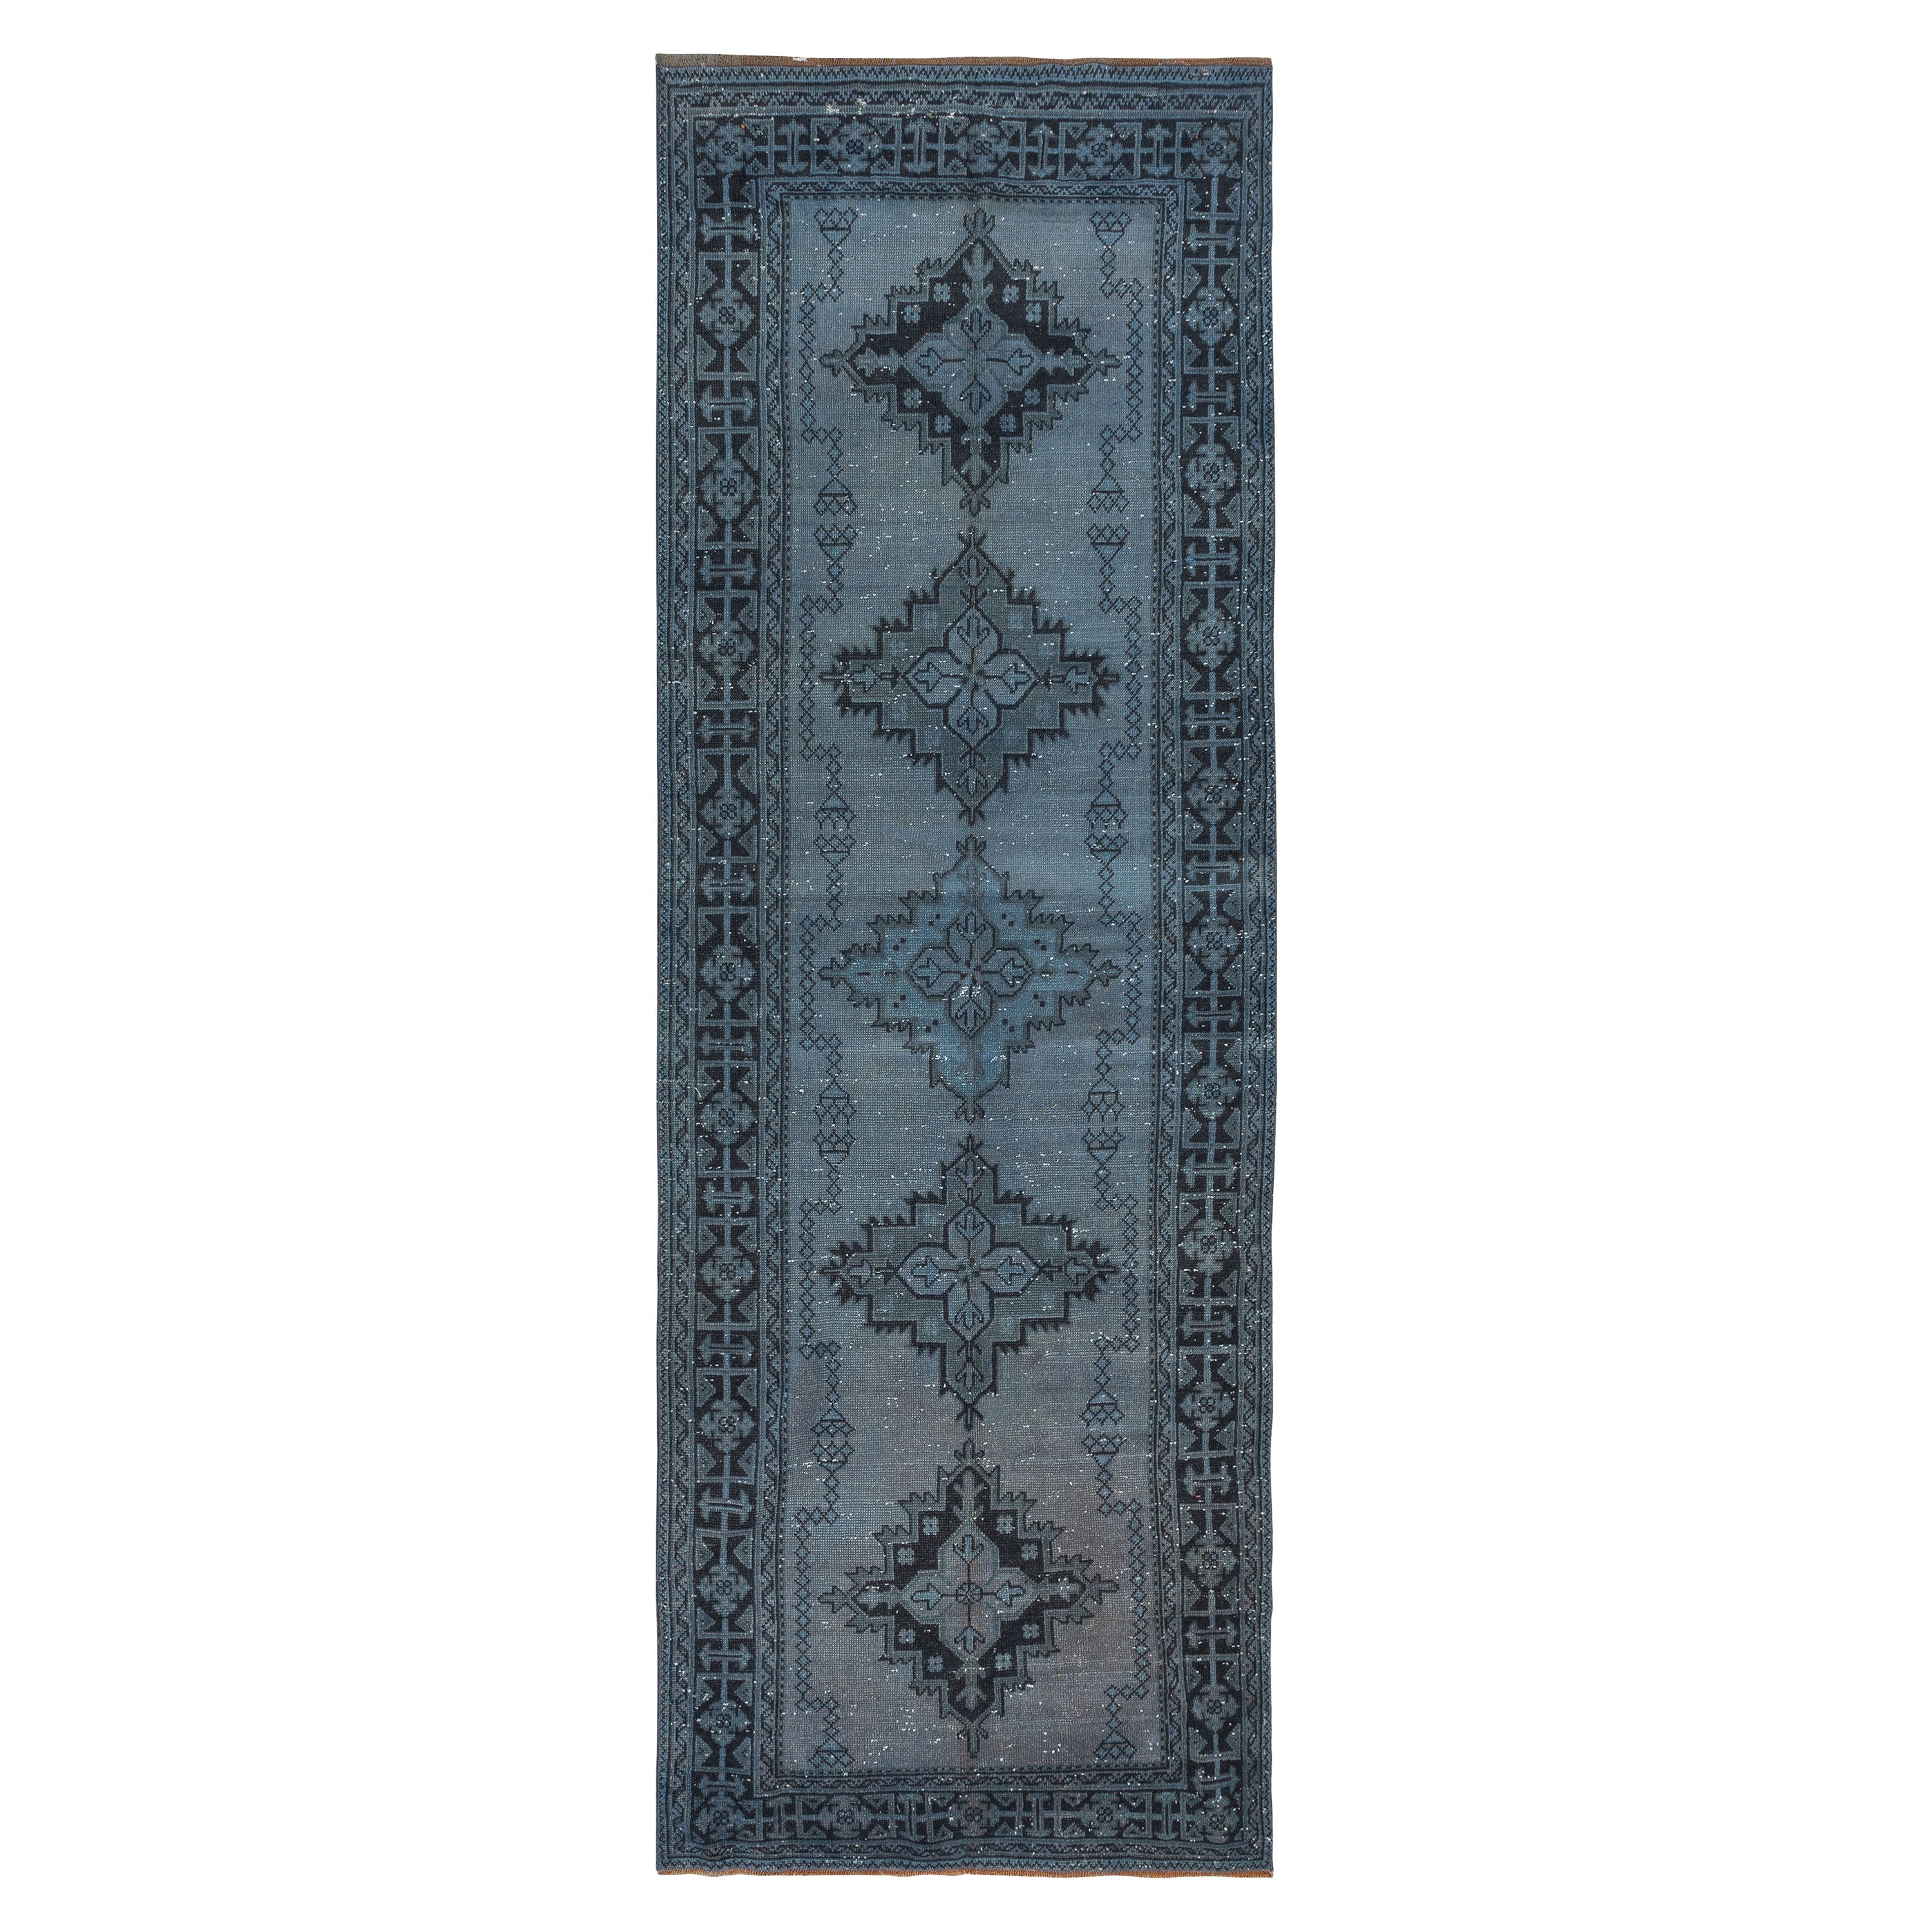 4.5x12.7 Ft Runner Rug Kitchen, Faded Blue Handmade Turkish Hallway Carpet For Sale